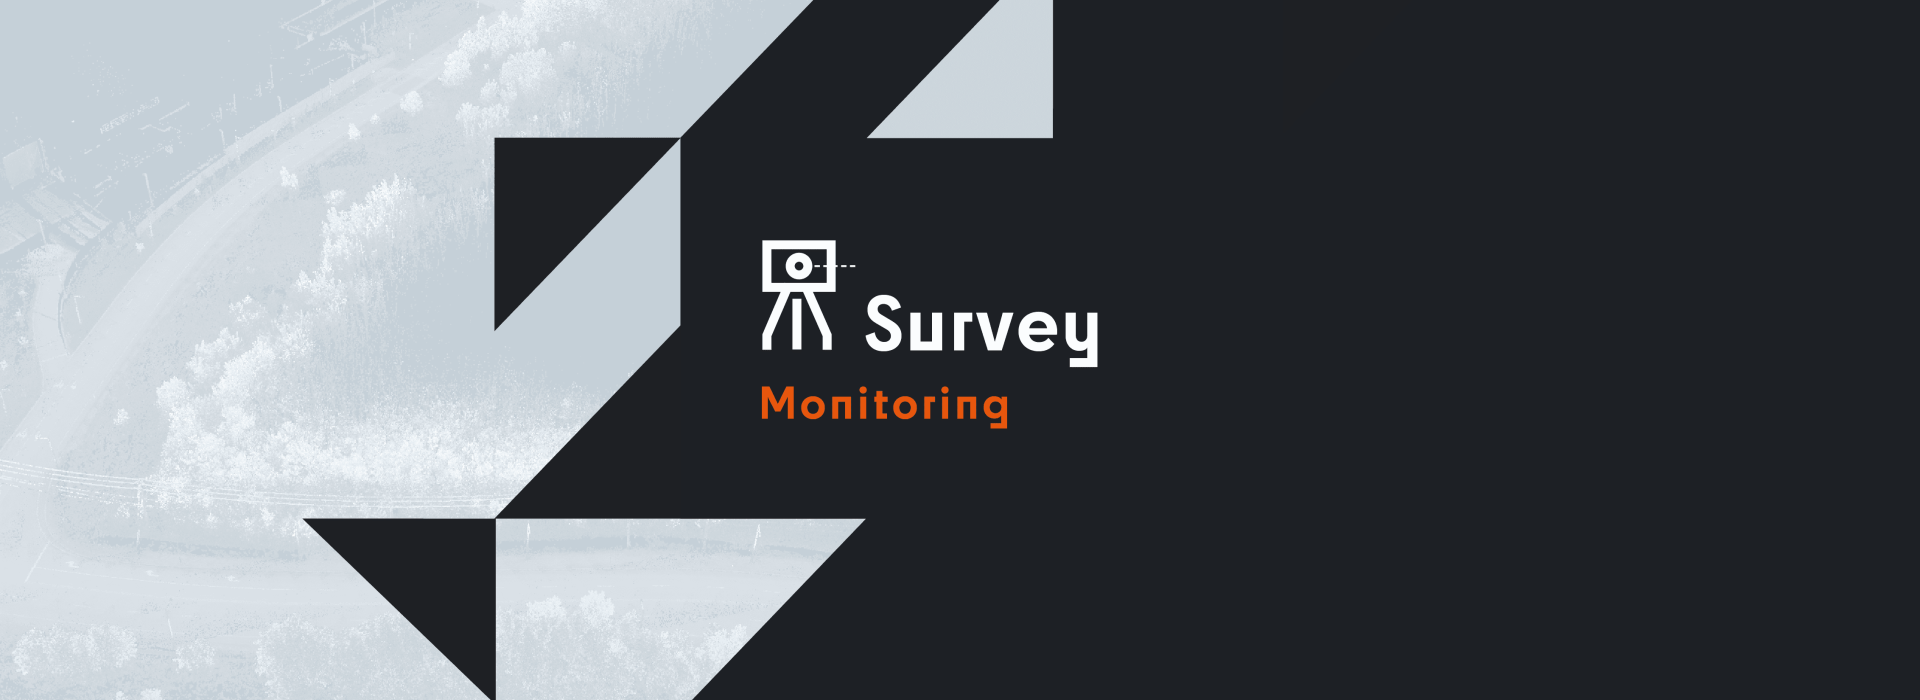 ANGLAIS_WebBanner_Survey - Monitoring